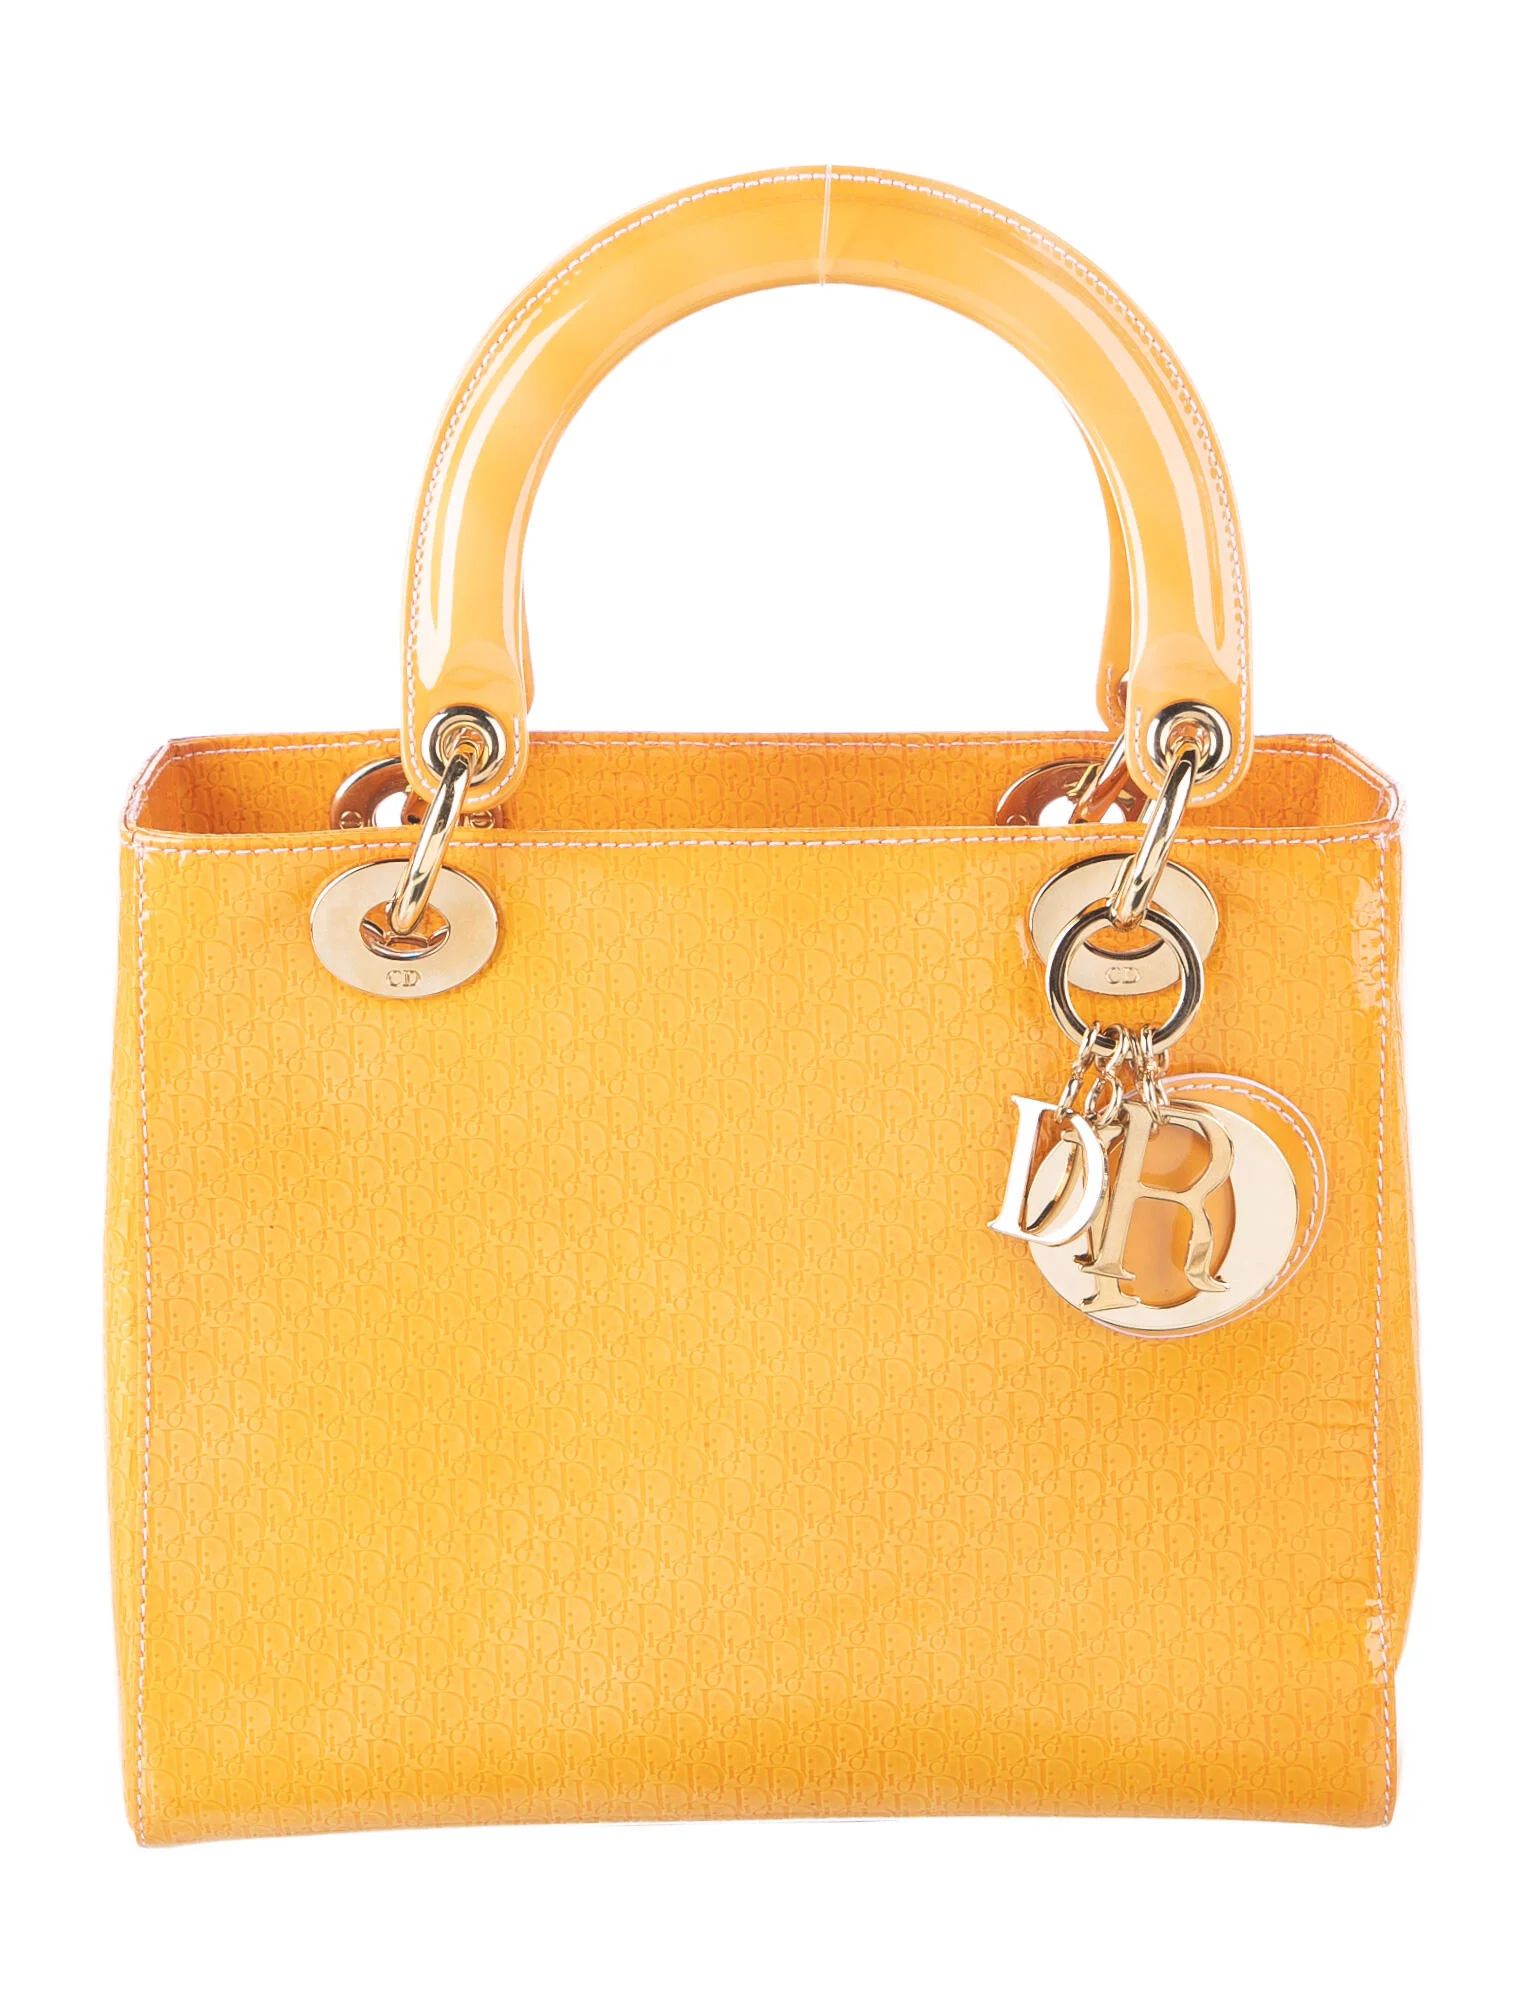 Medium Microdiorissimo Lady Dior Bag | The RealReal